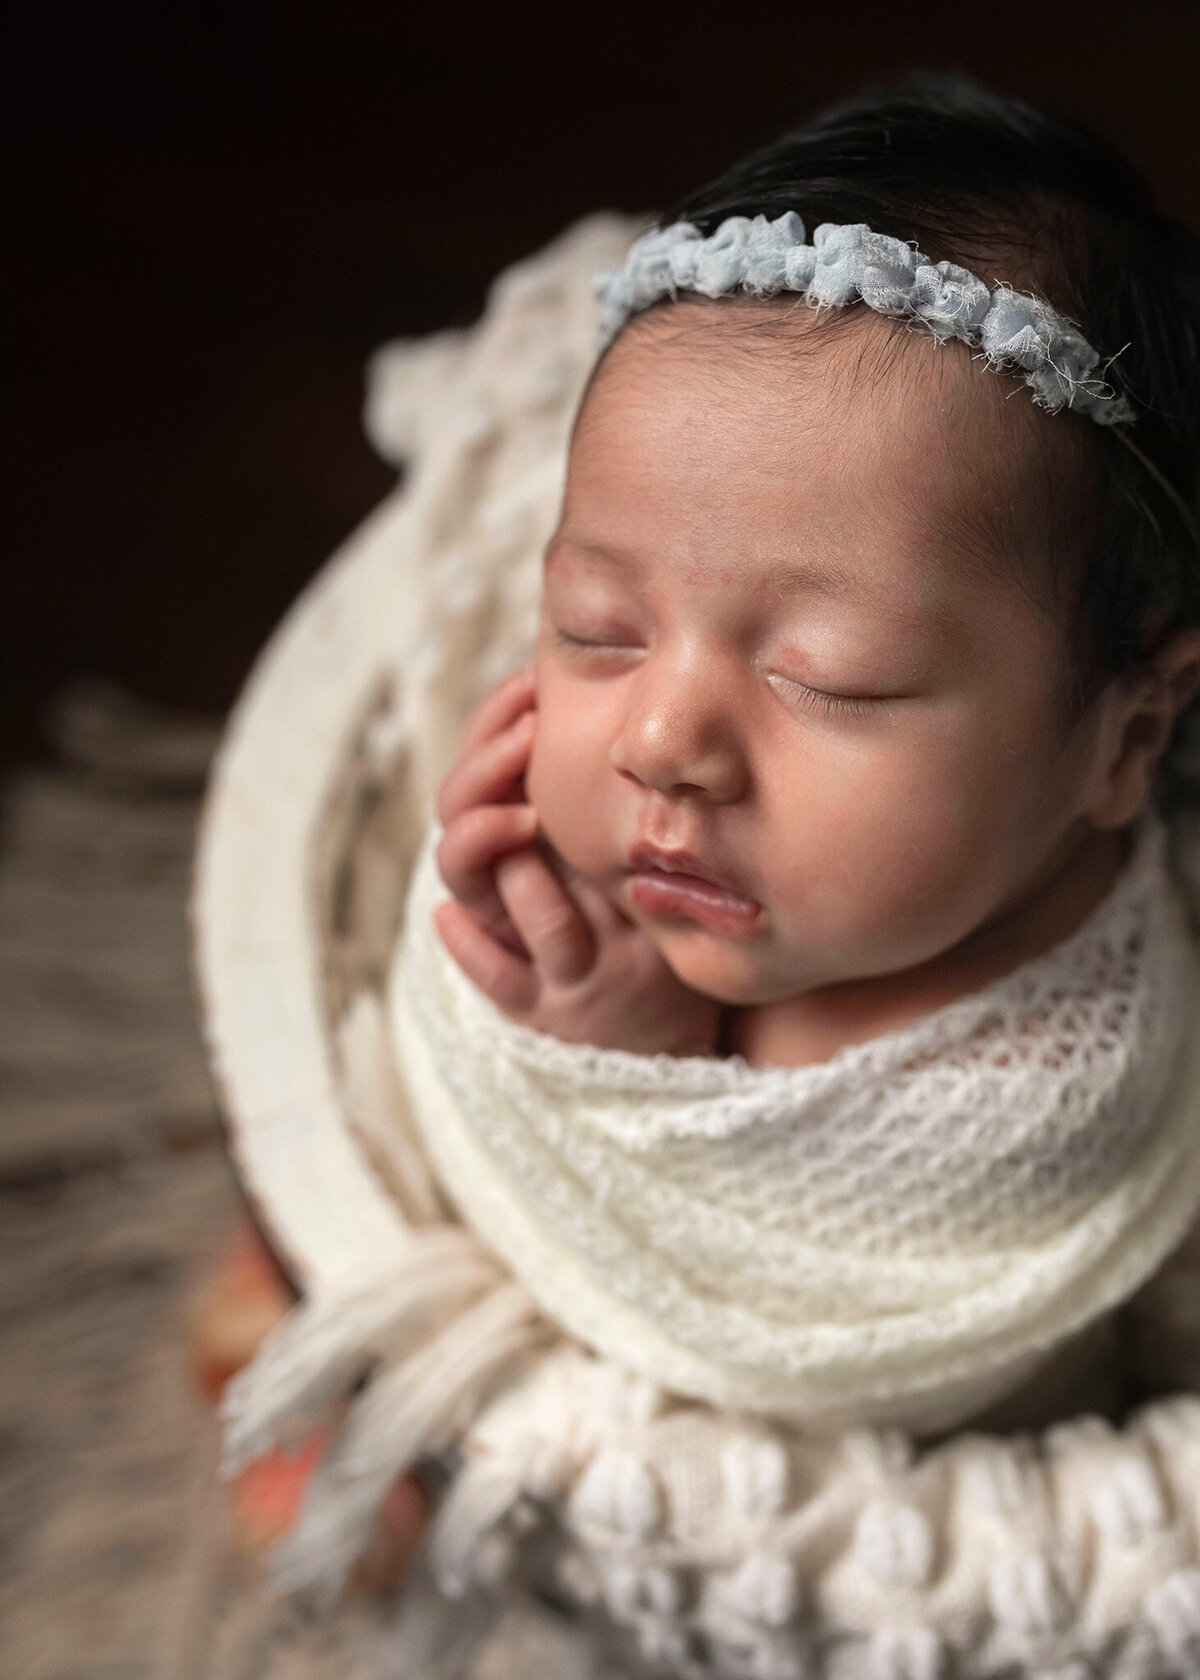 NJ Newborn Photographer captures brand new baby girl